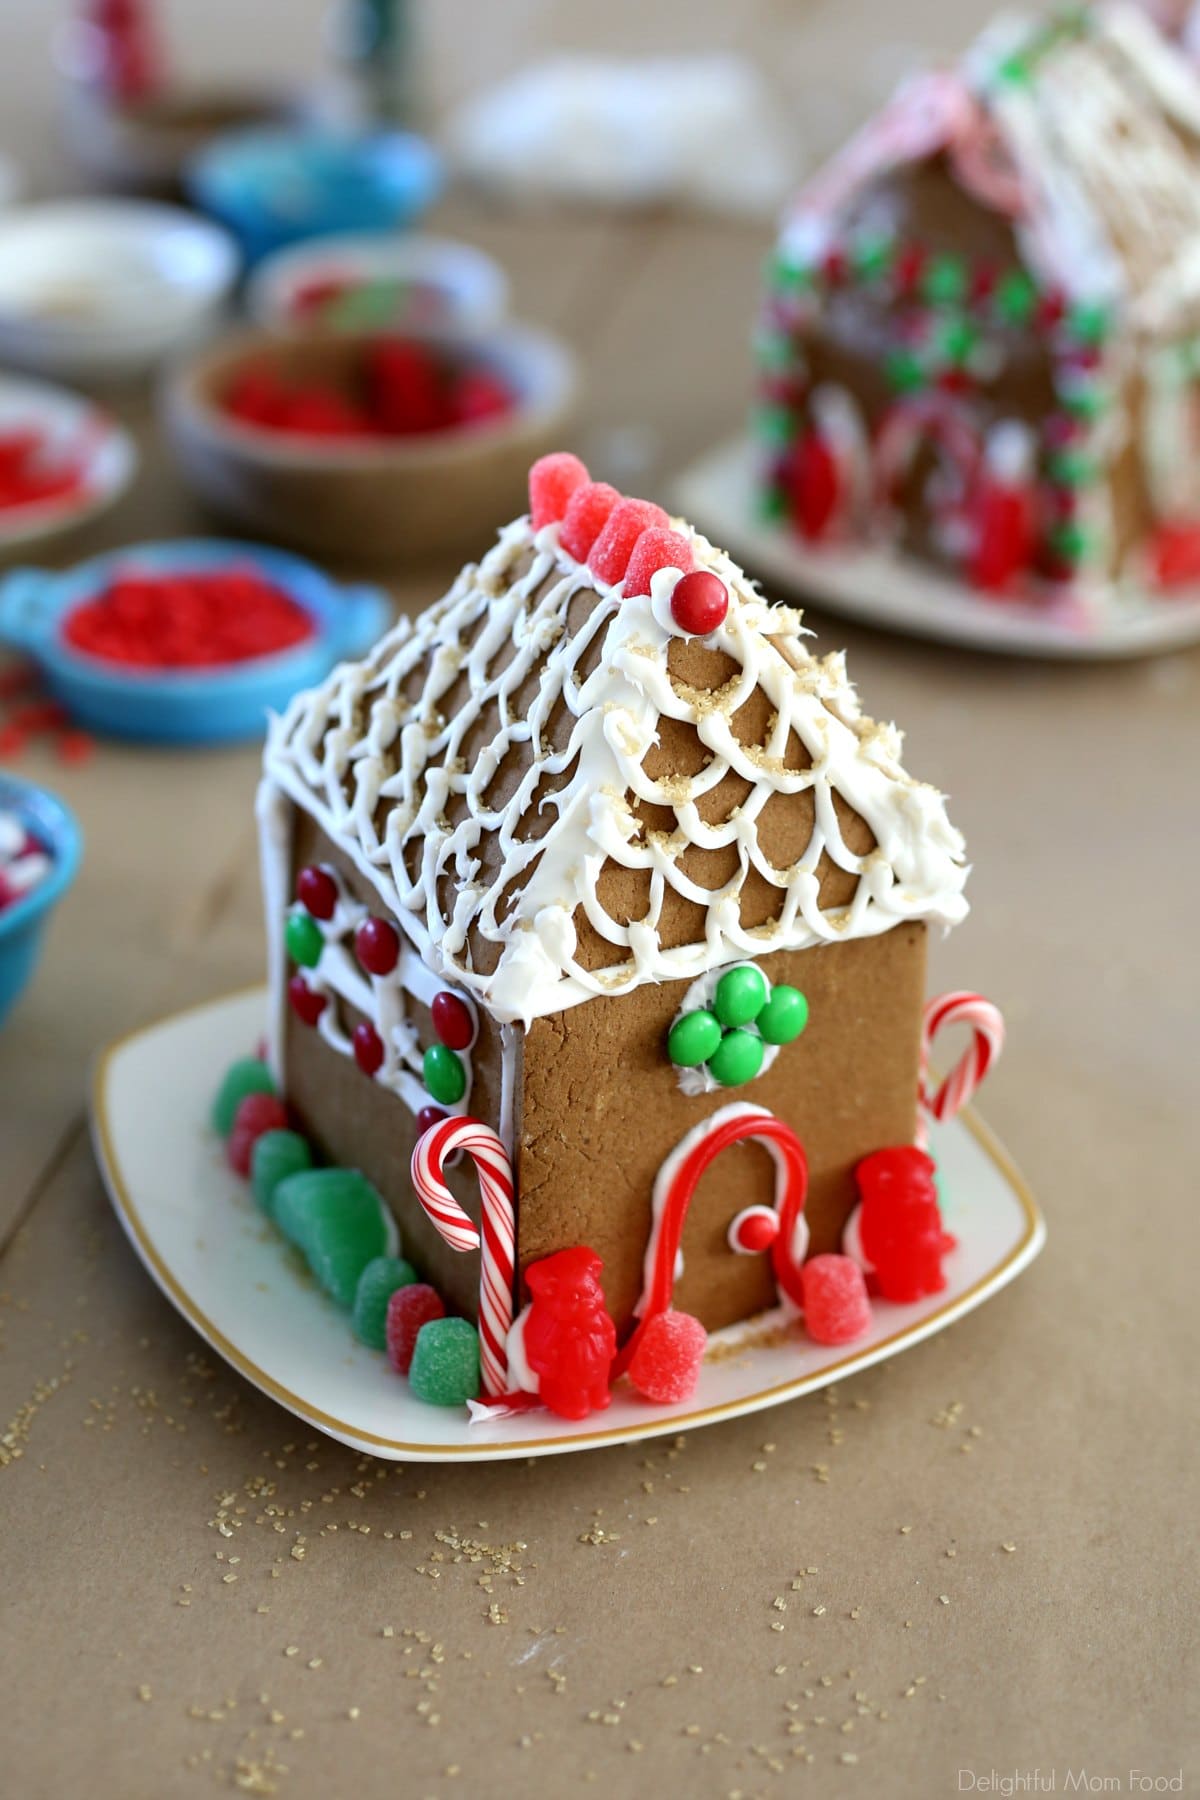 https://delightfulmomfood.com/wp-content/uploads/2020/12/gluten-free-gingerbread-house-4.jpg